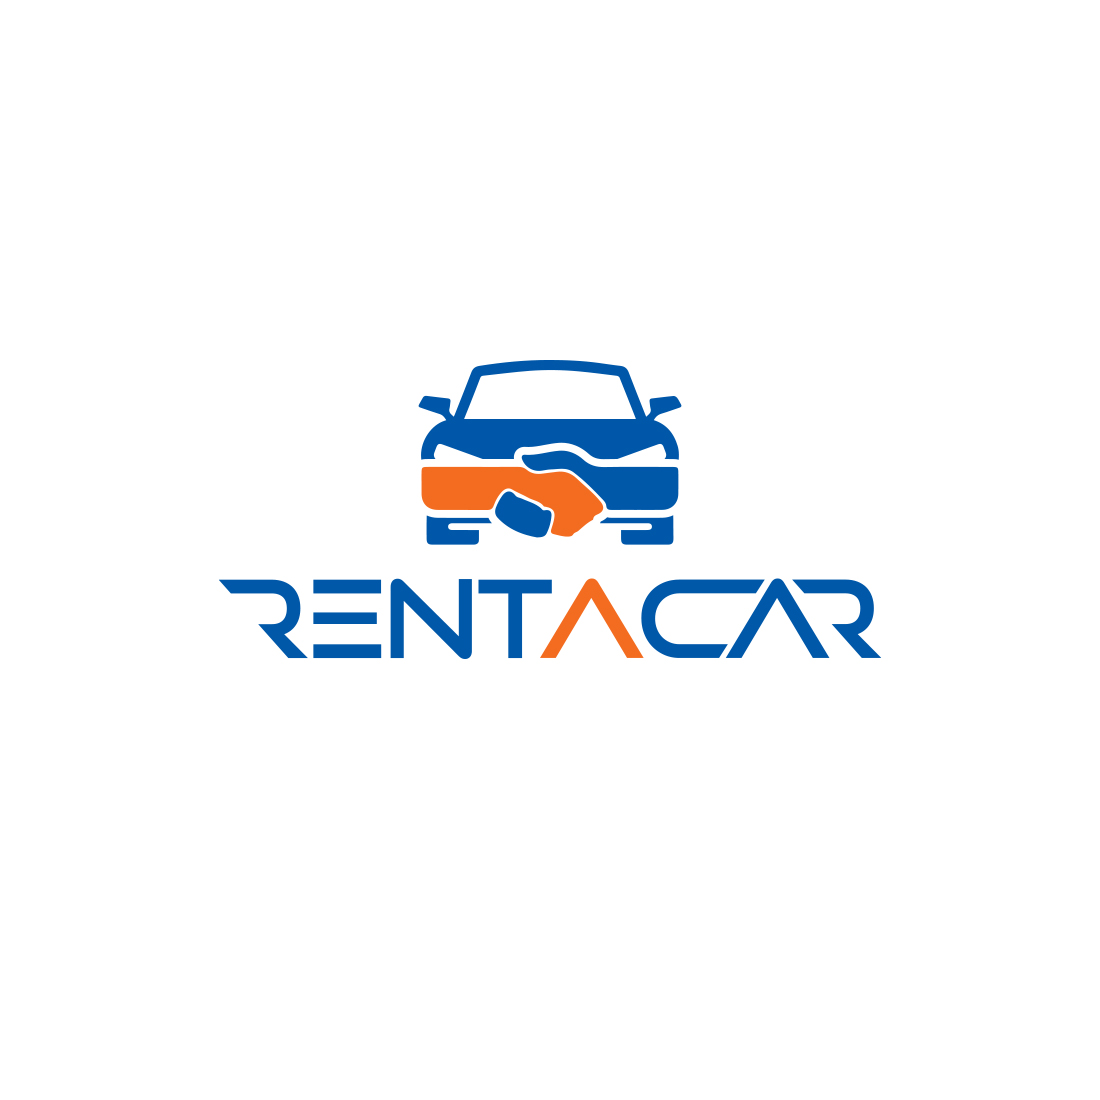 Car Rental Logo cover image.